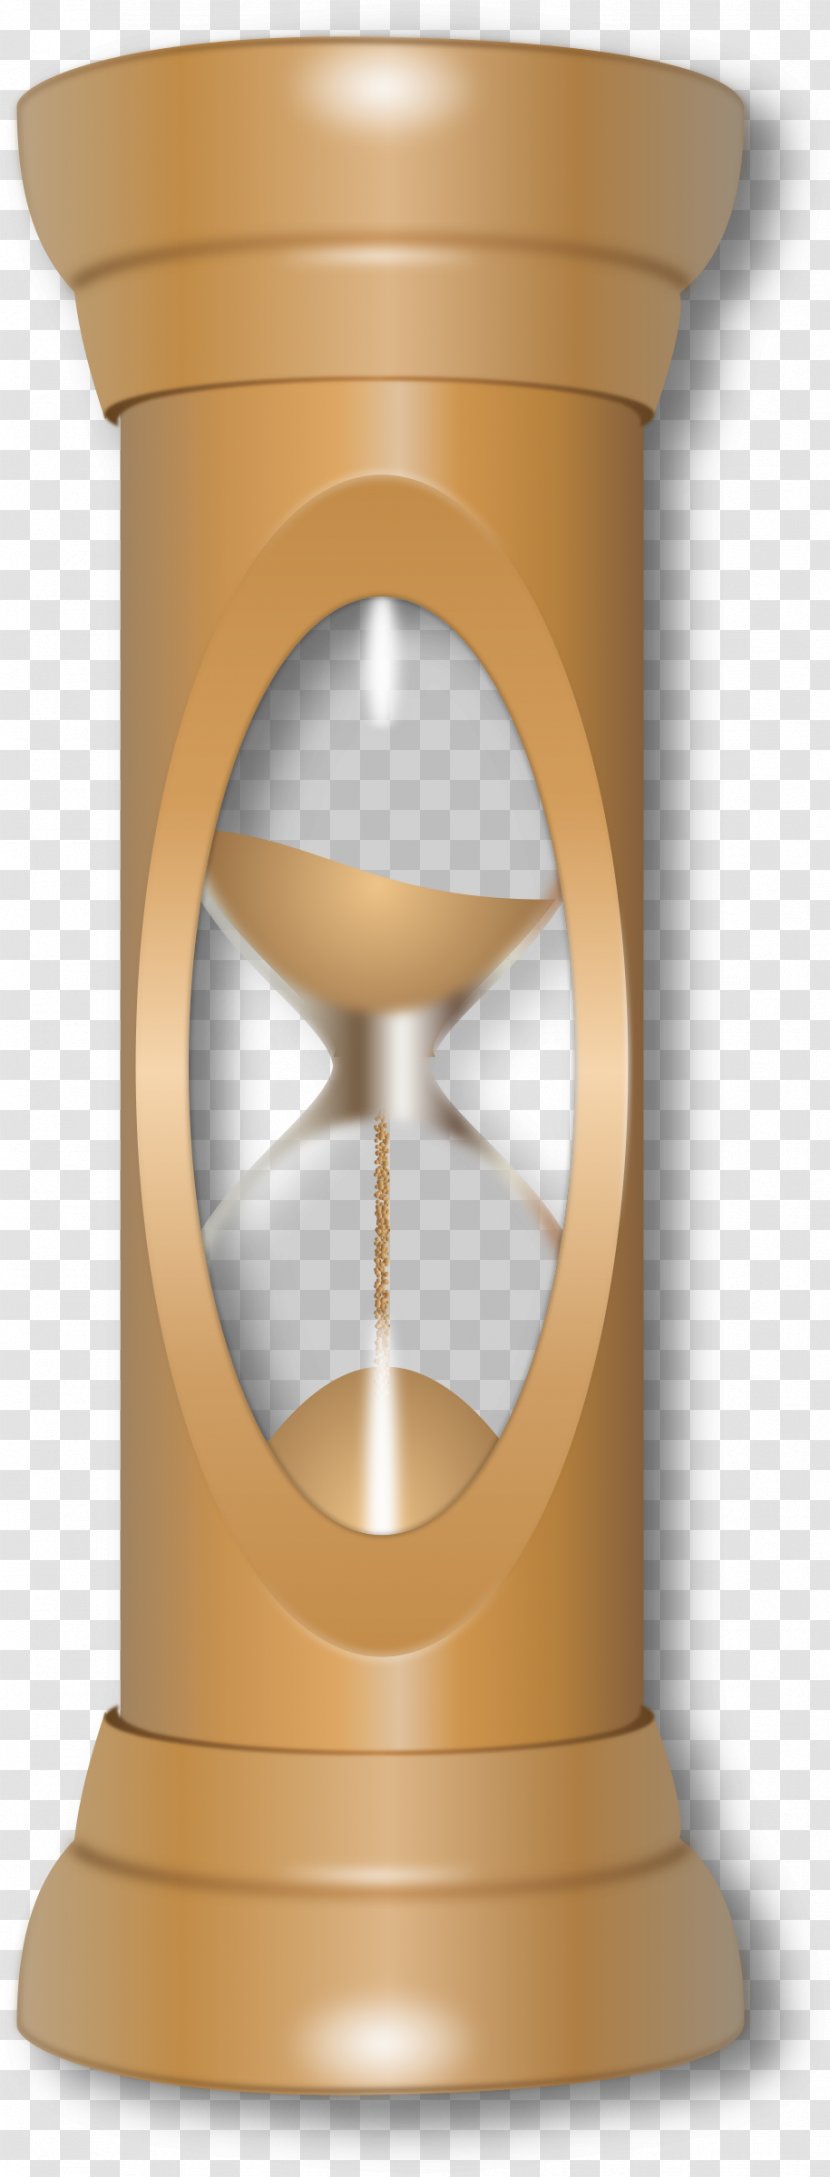 Hourglass Timer Clock Clip Art Transparent PNG